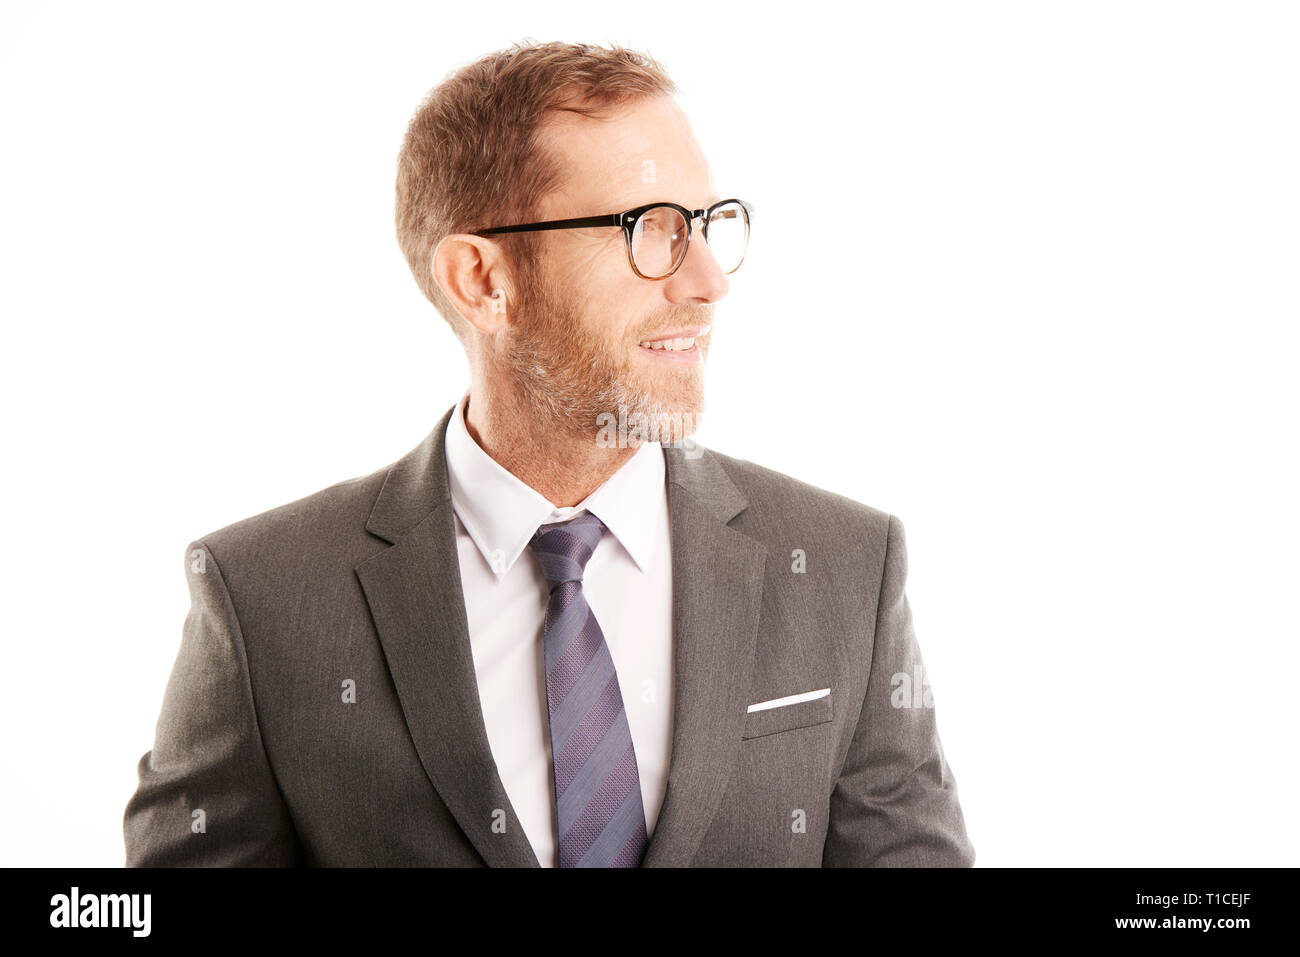 Executive financial advisor businessman wearing eyeglasses and suit ...